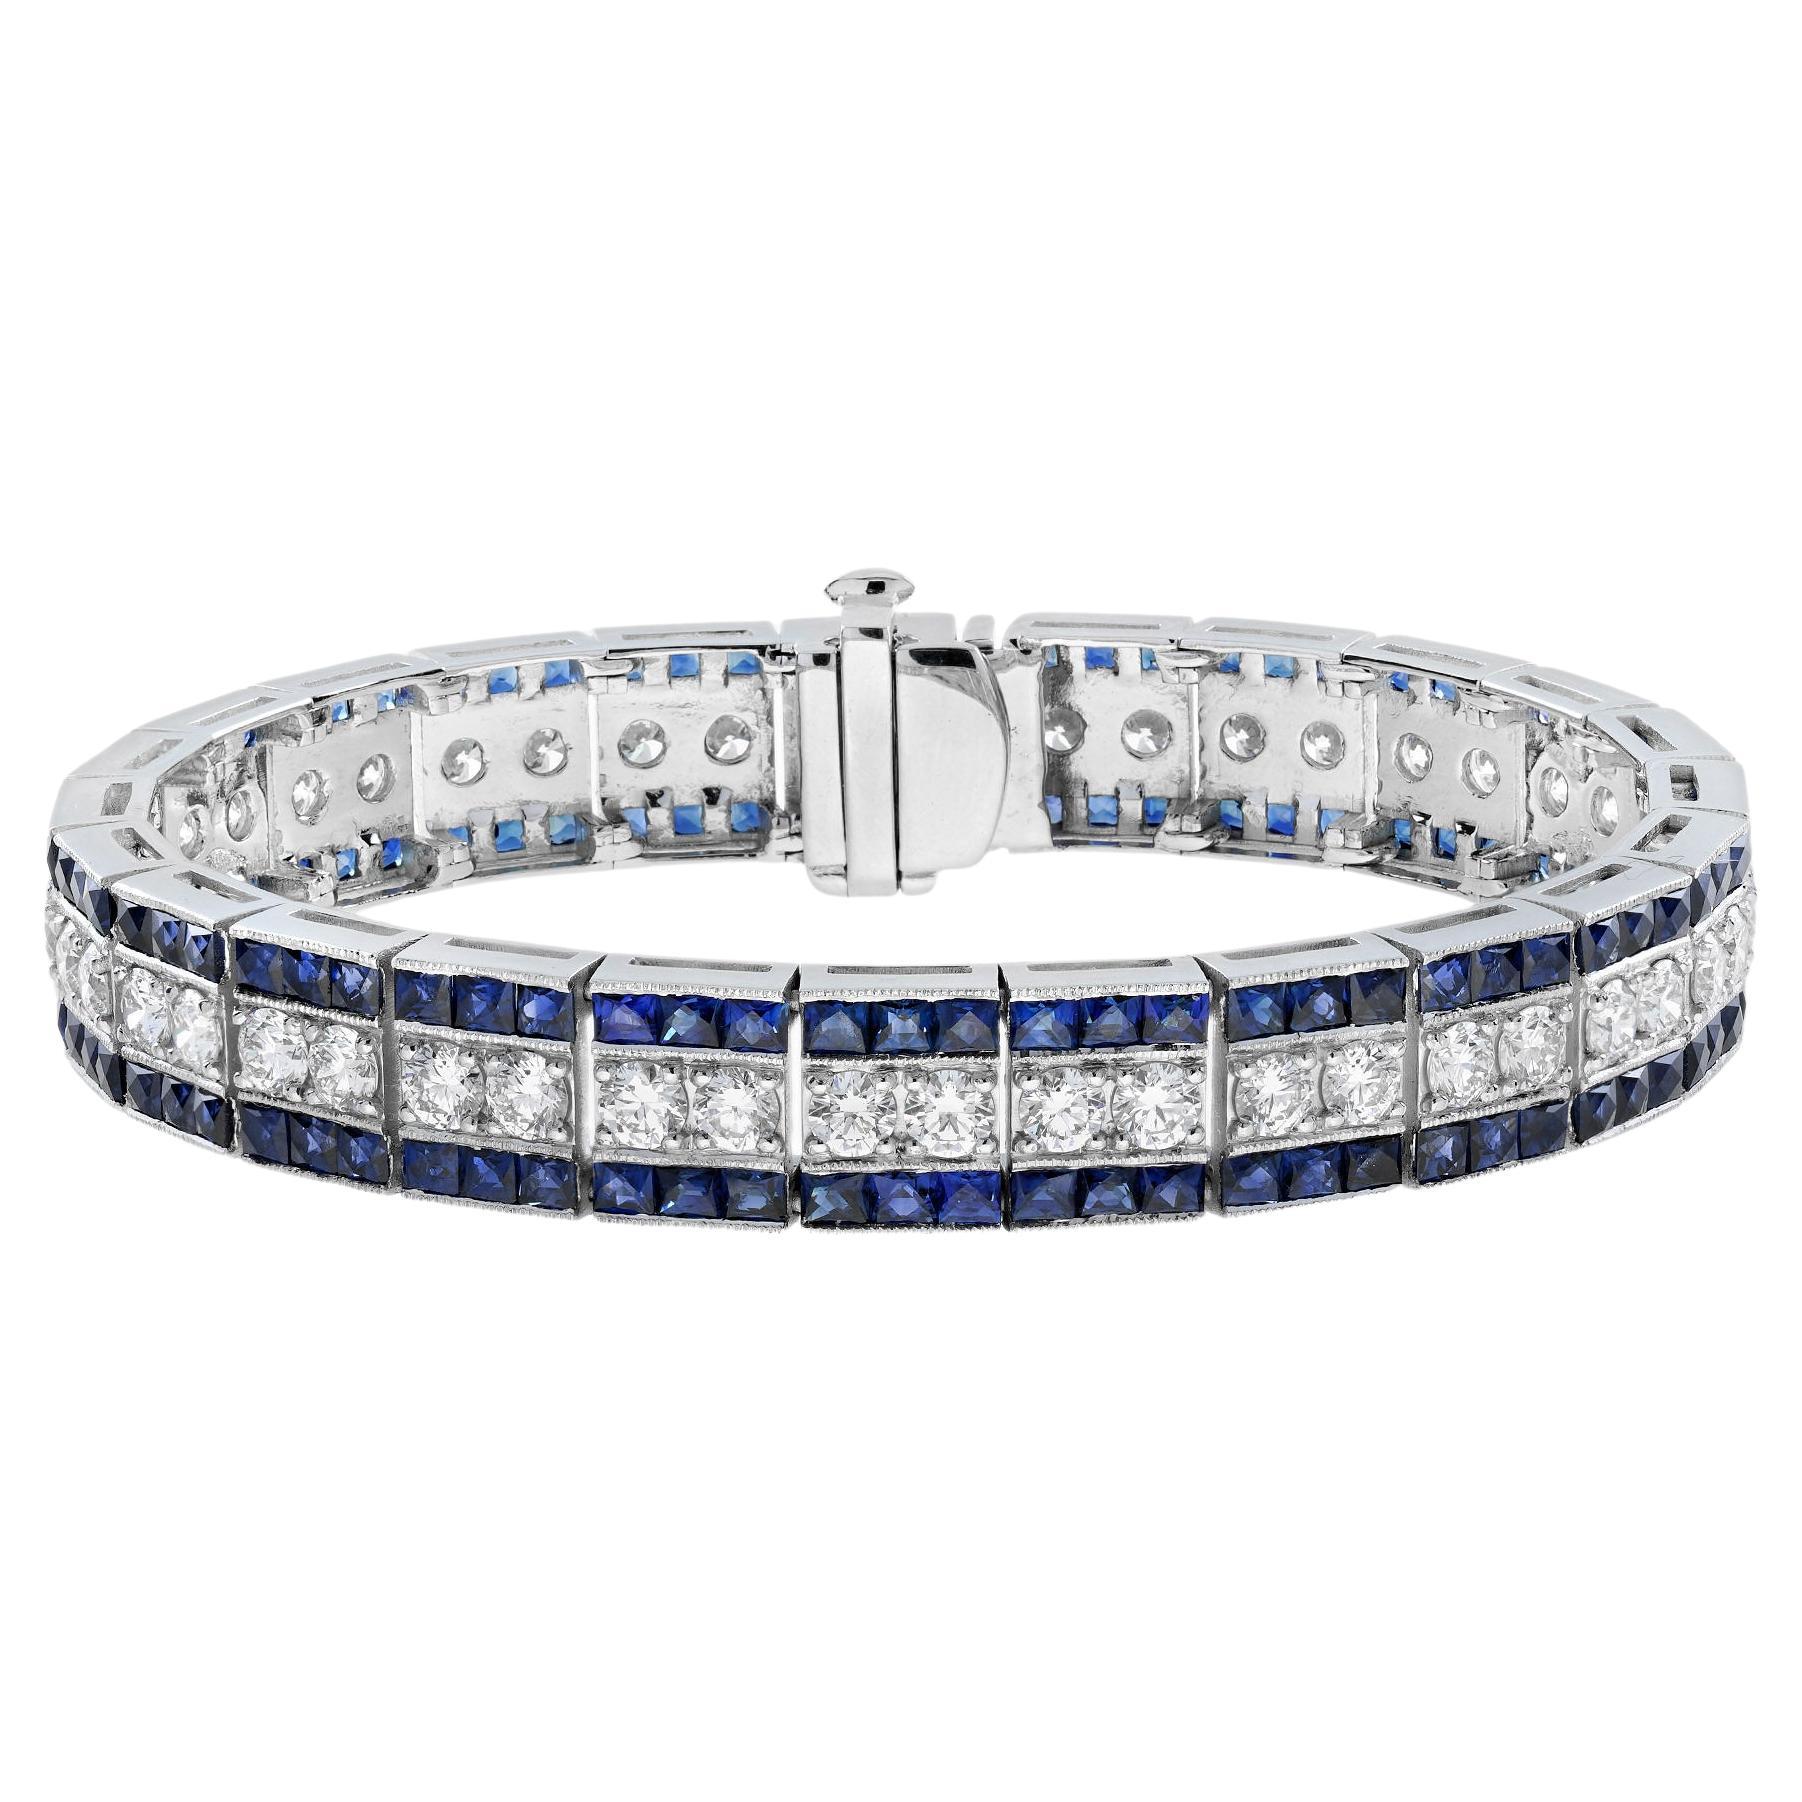 6.7 Ct. Diamond and Blue Sapphire Art Deco Style Bracelet in Platinum950 For Sale